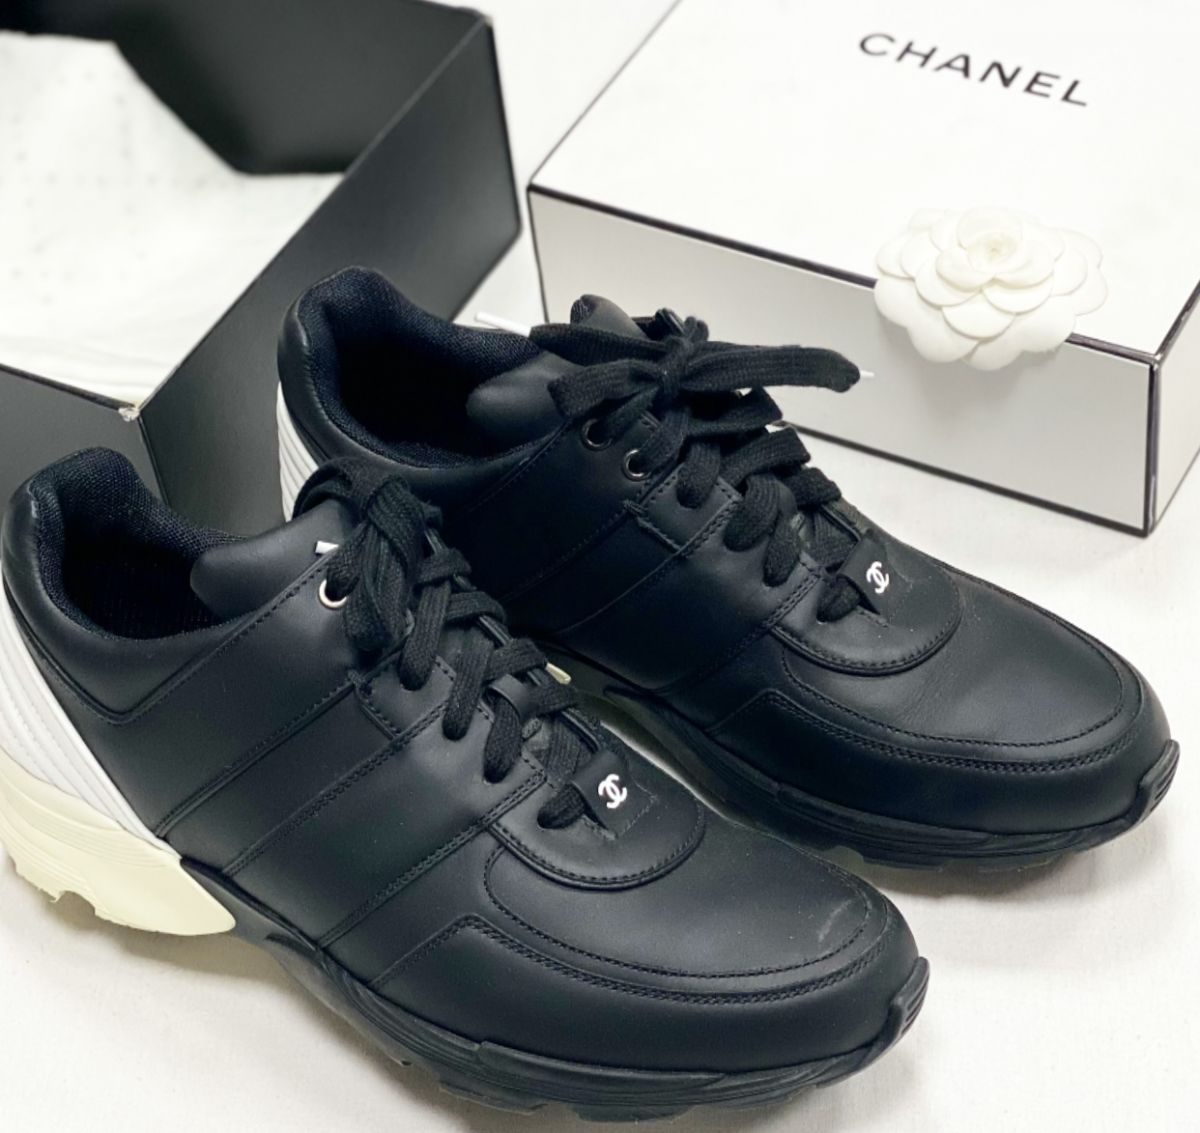 Кроссовки Chanel размер 42 цена 61 540 руб 